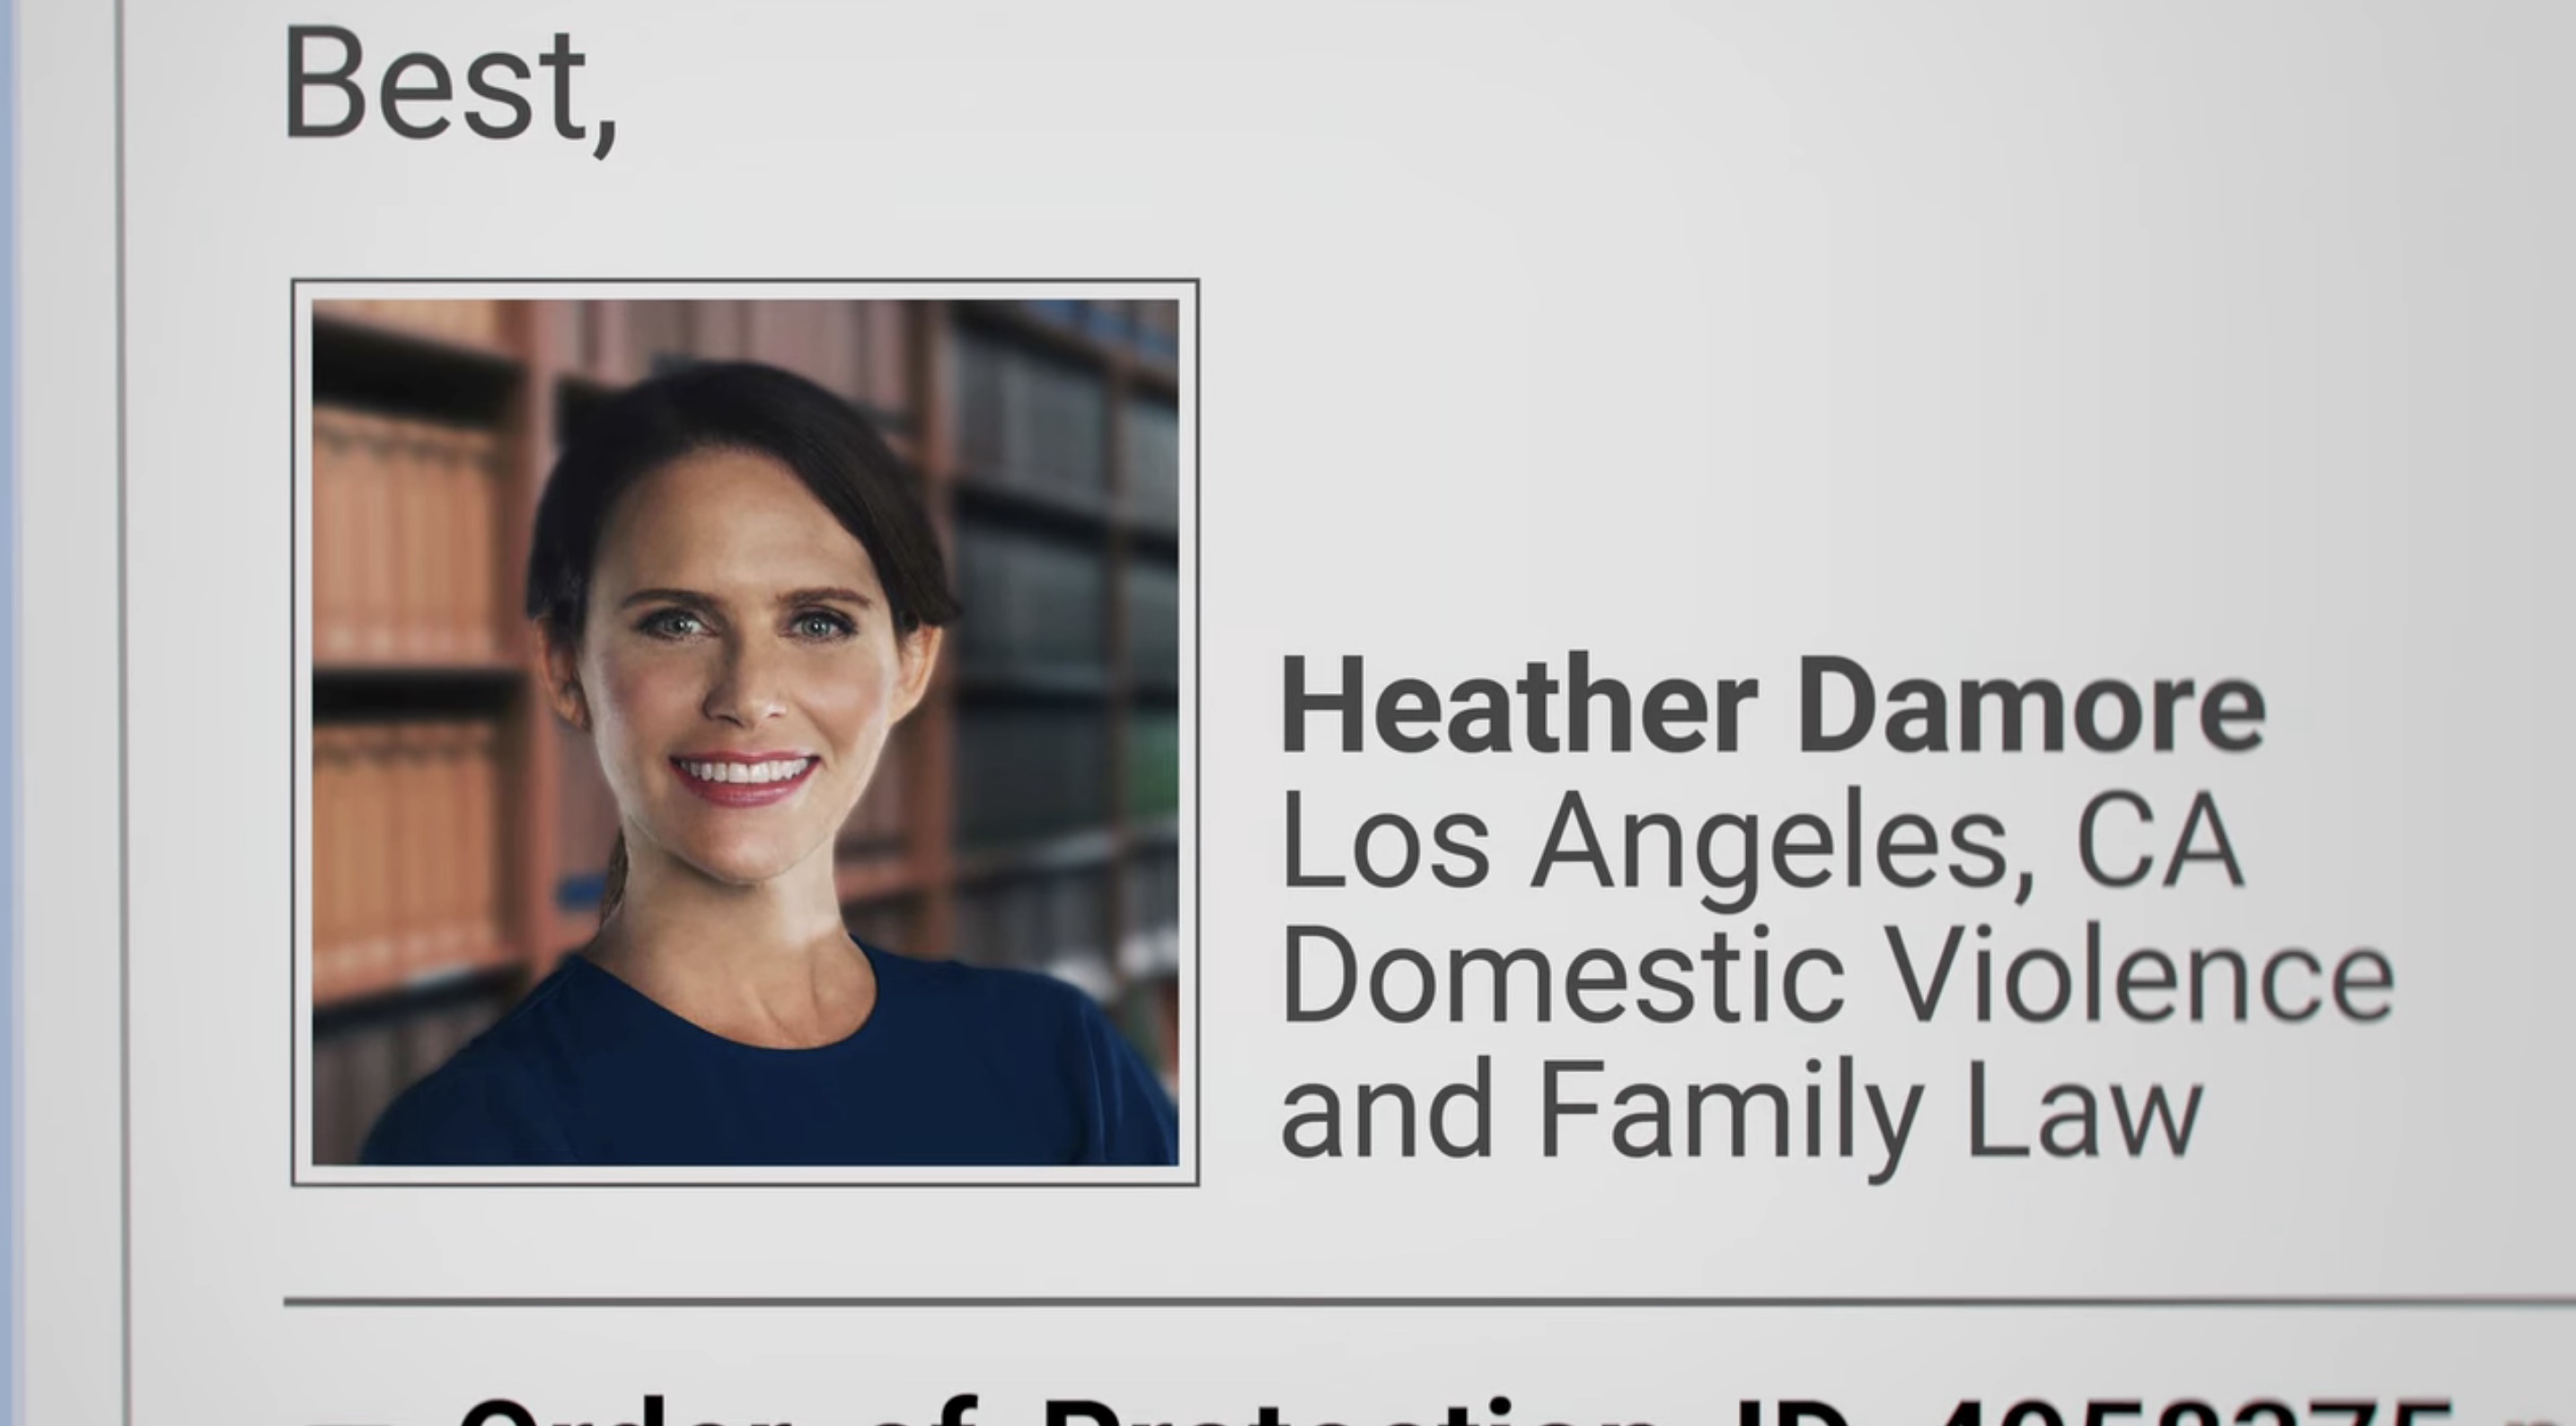 Missing Cast on Netflix - Amy Landecker as Heather